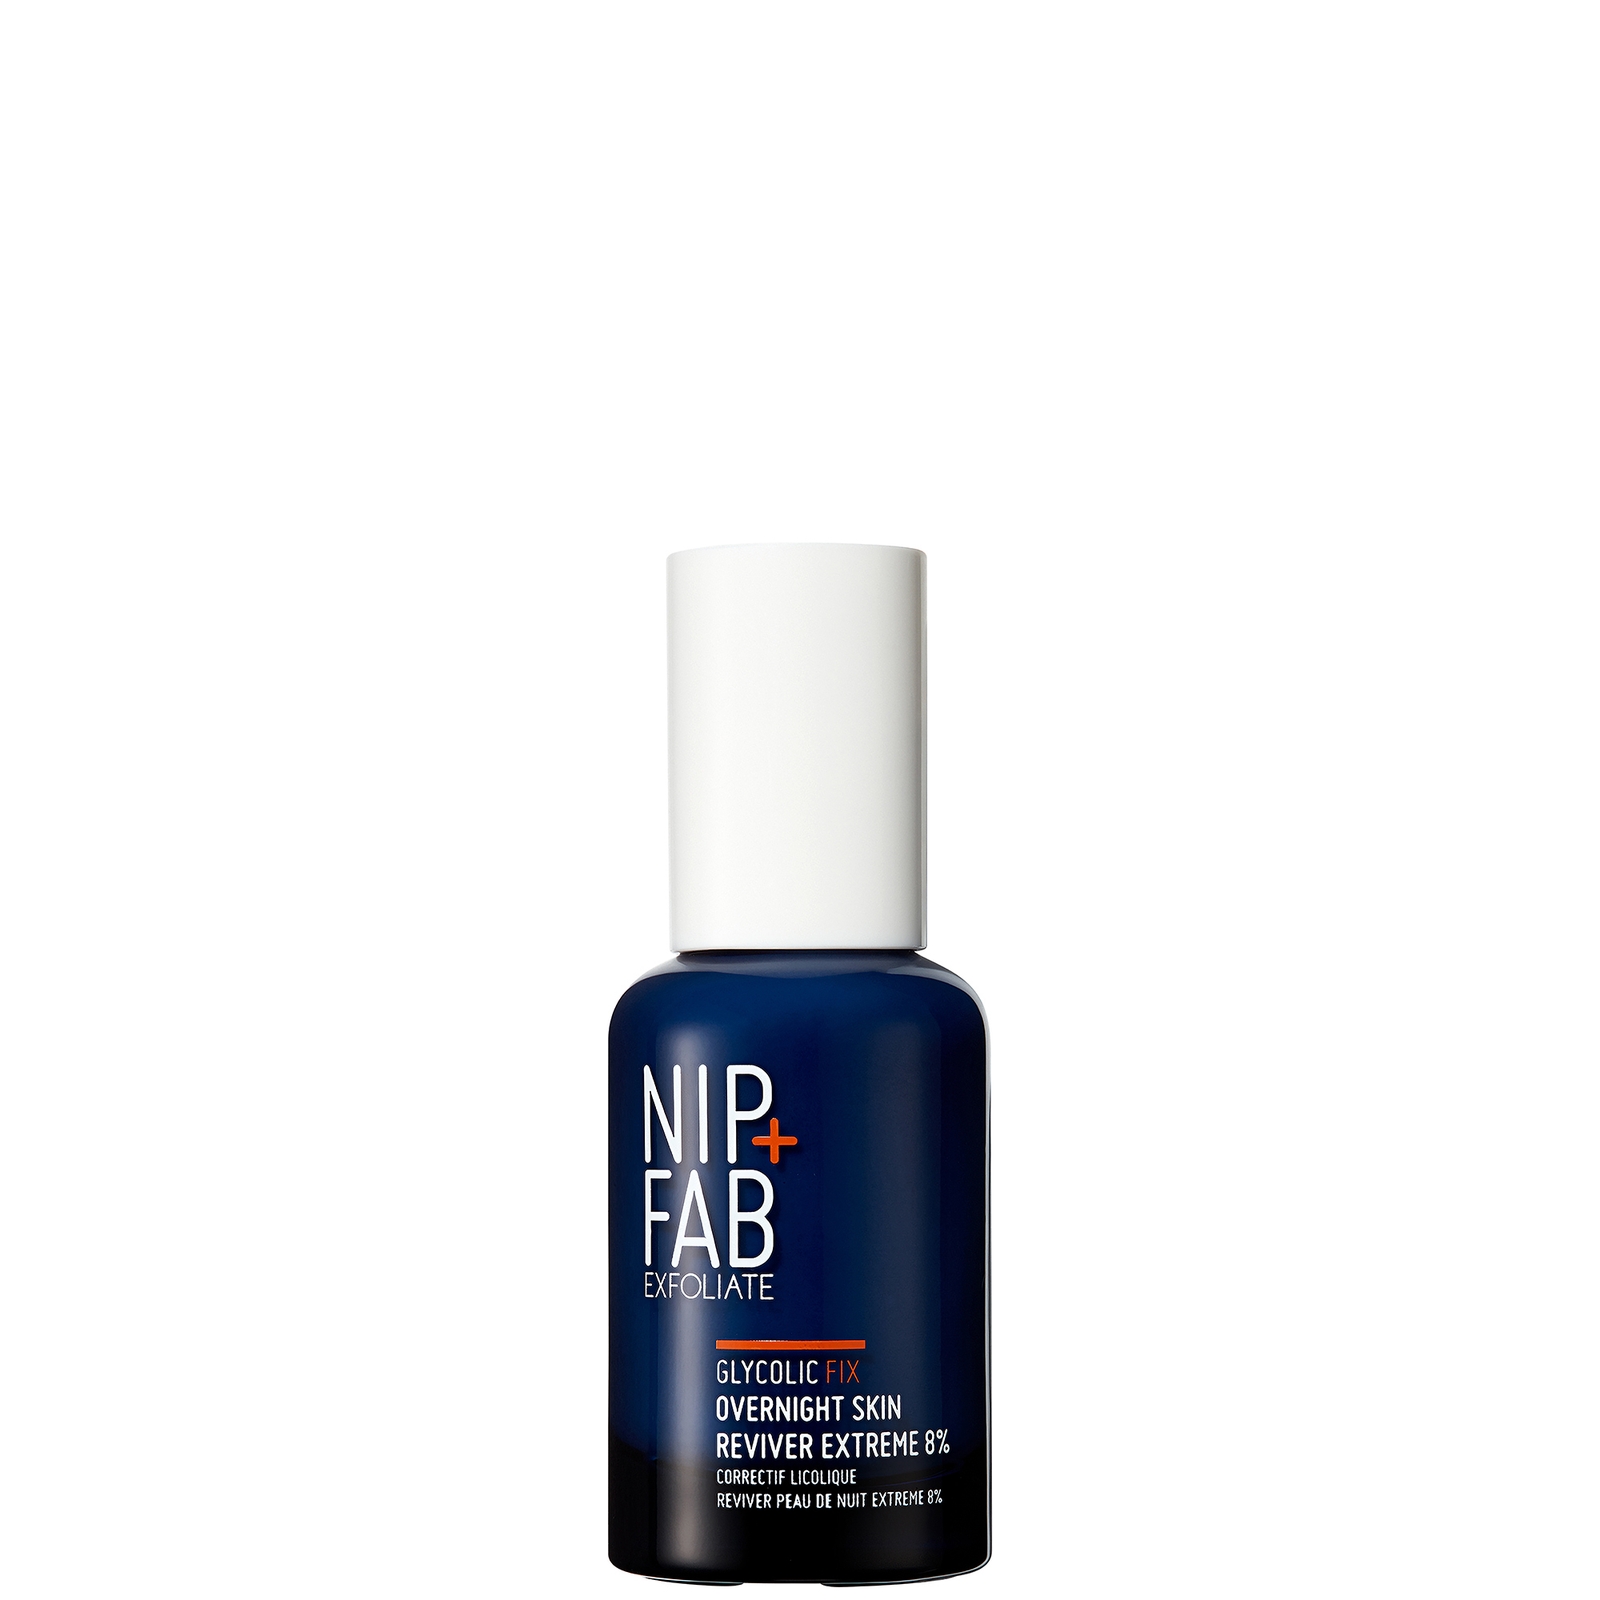 NIP+FAB Glycolic Fix Overnight Skin Reviver Extreme 8% 45ml